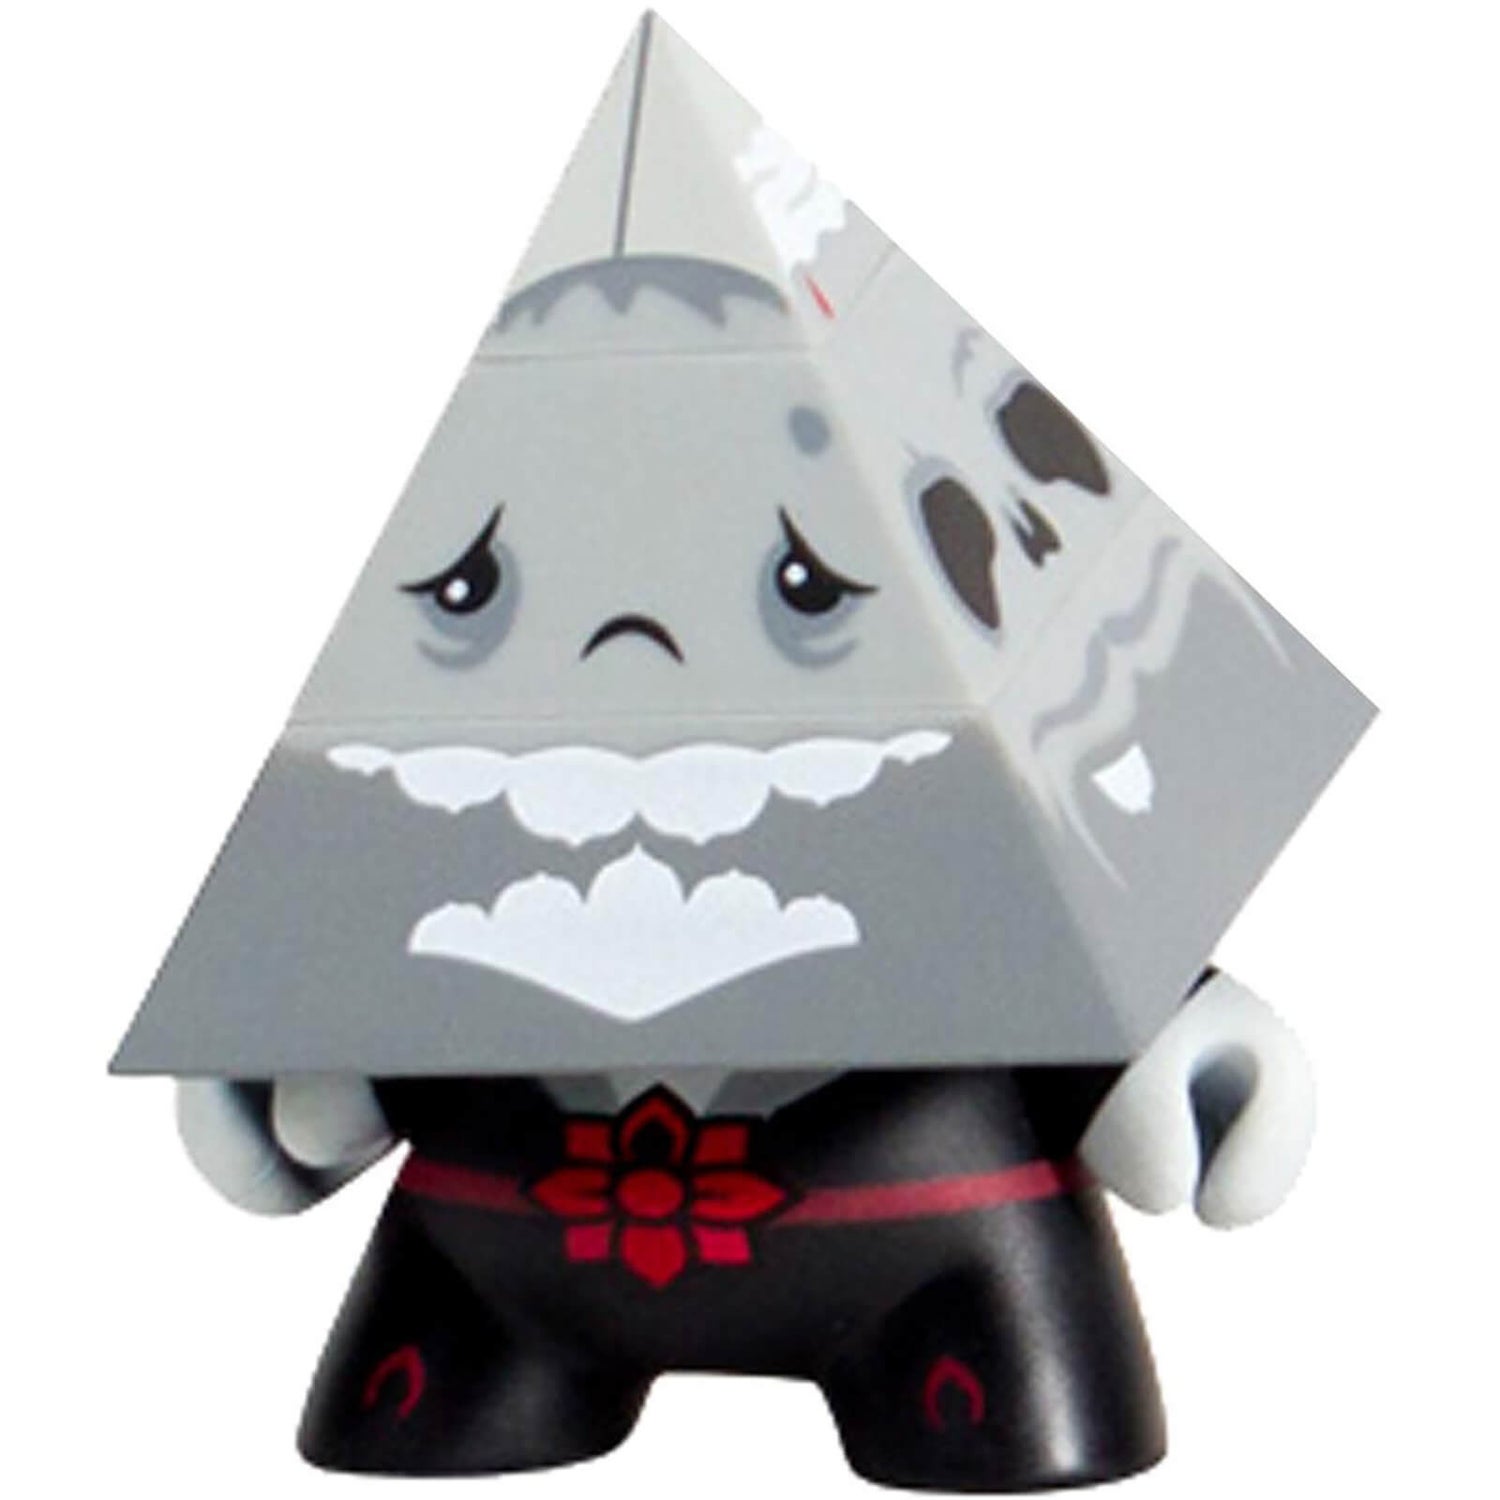 Kidrobot Pyramidun Dunny 3 Inch Gray